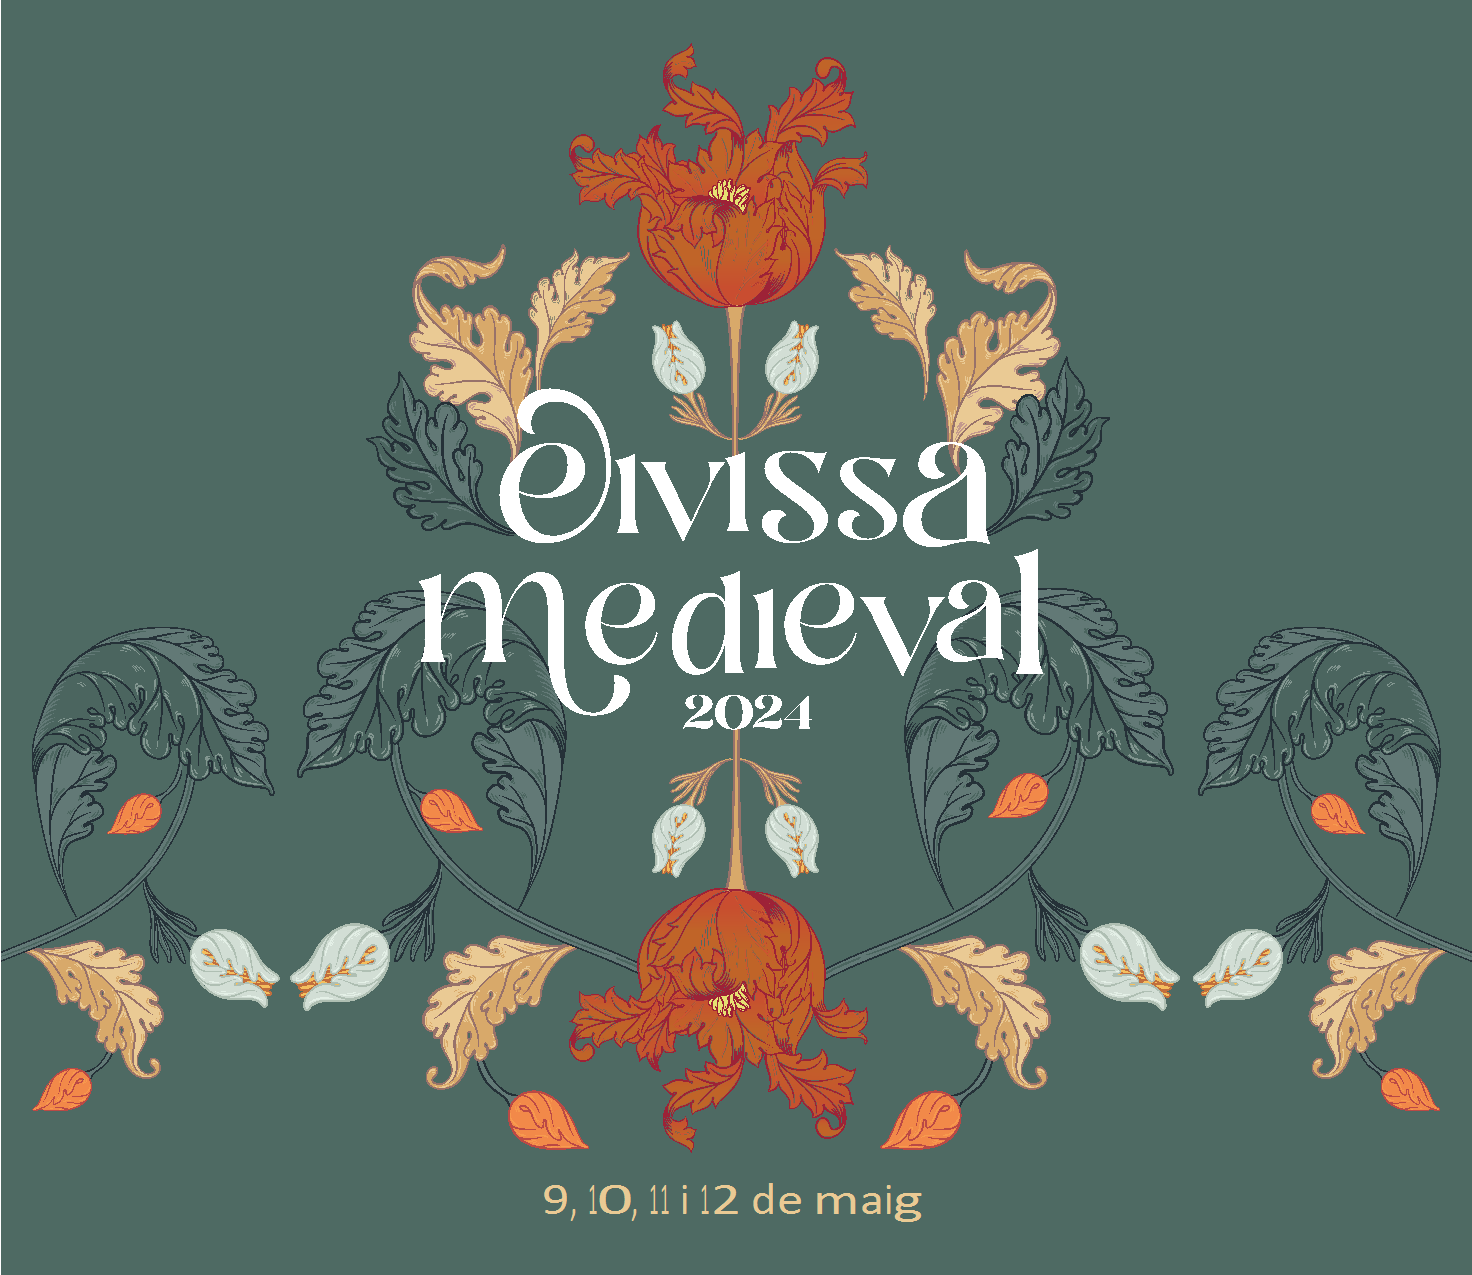 Eivissa Medieval 2024